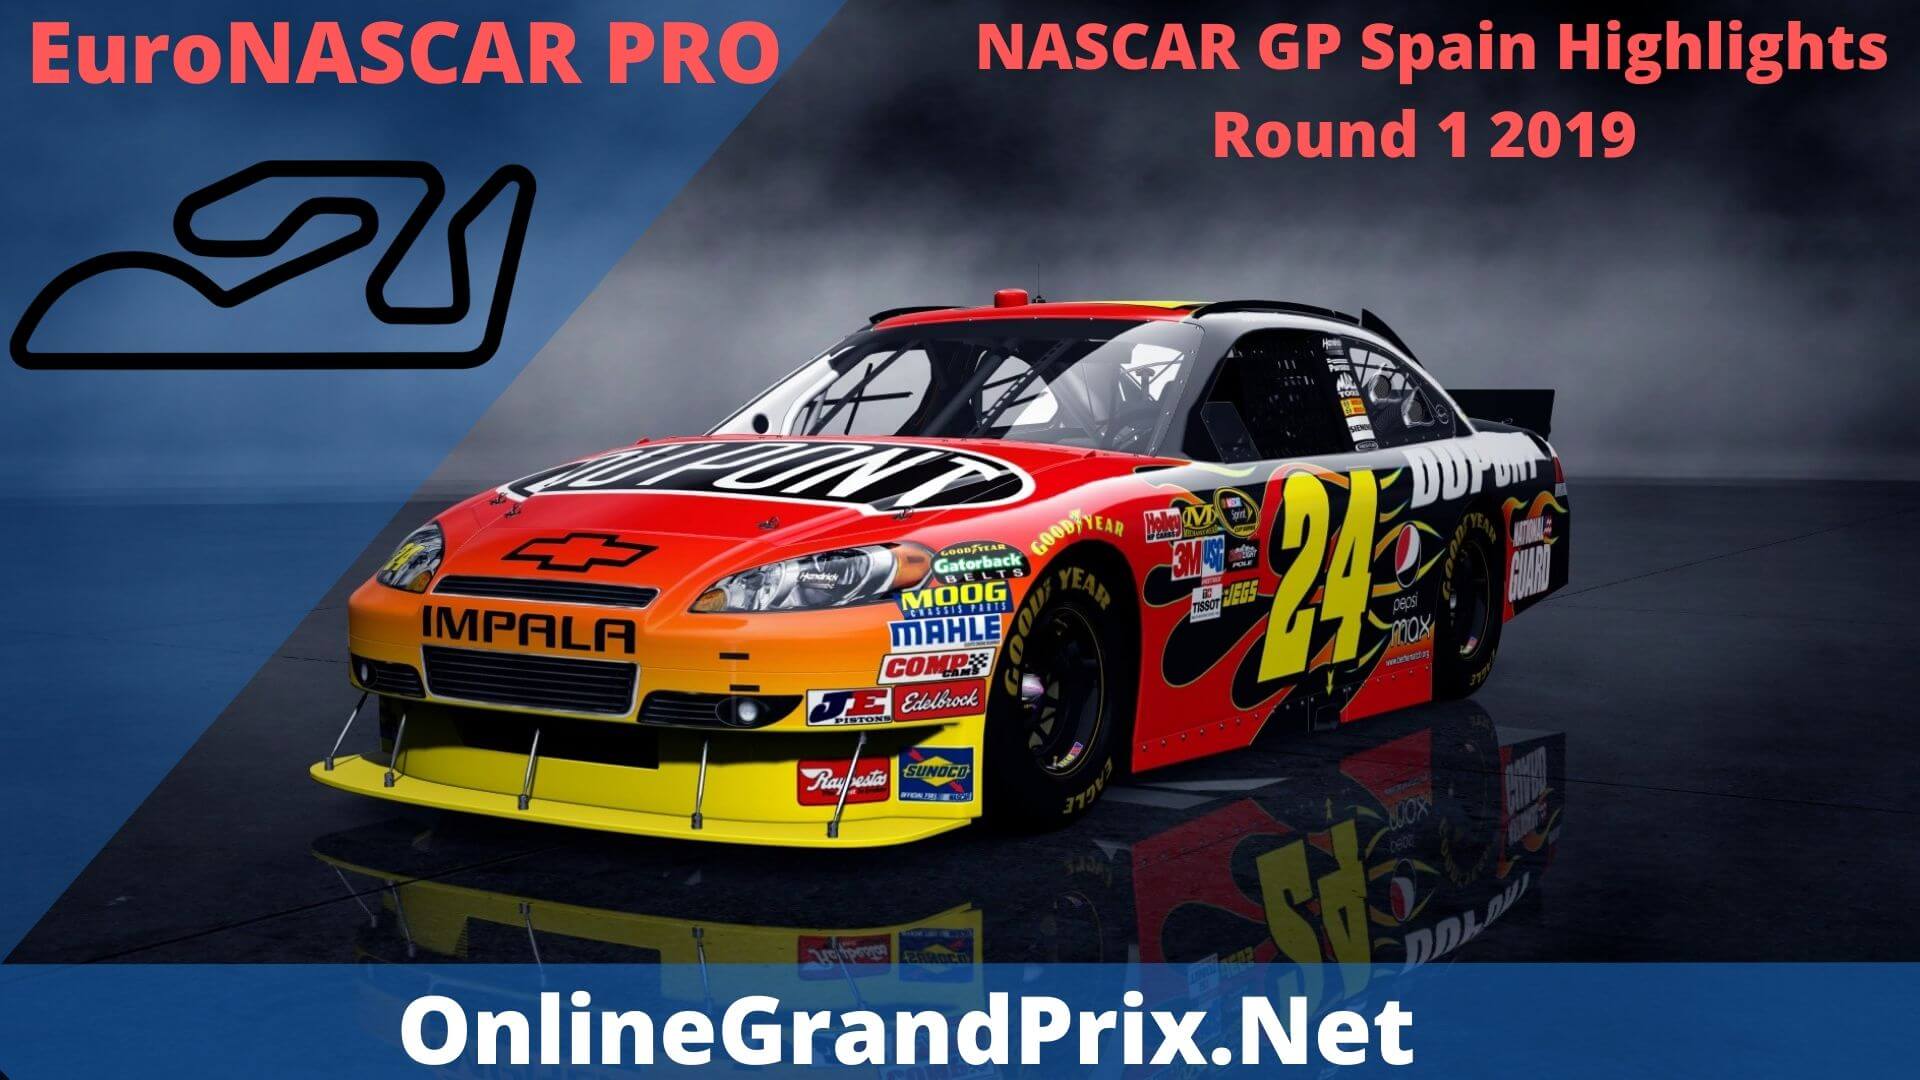 NASCAR GP Spain Round 1 Highlights 2019